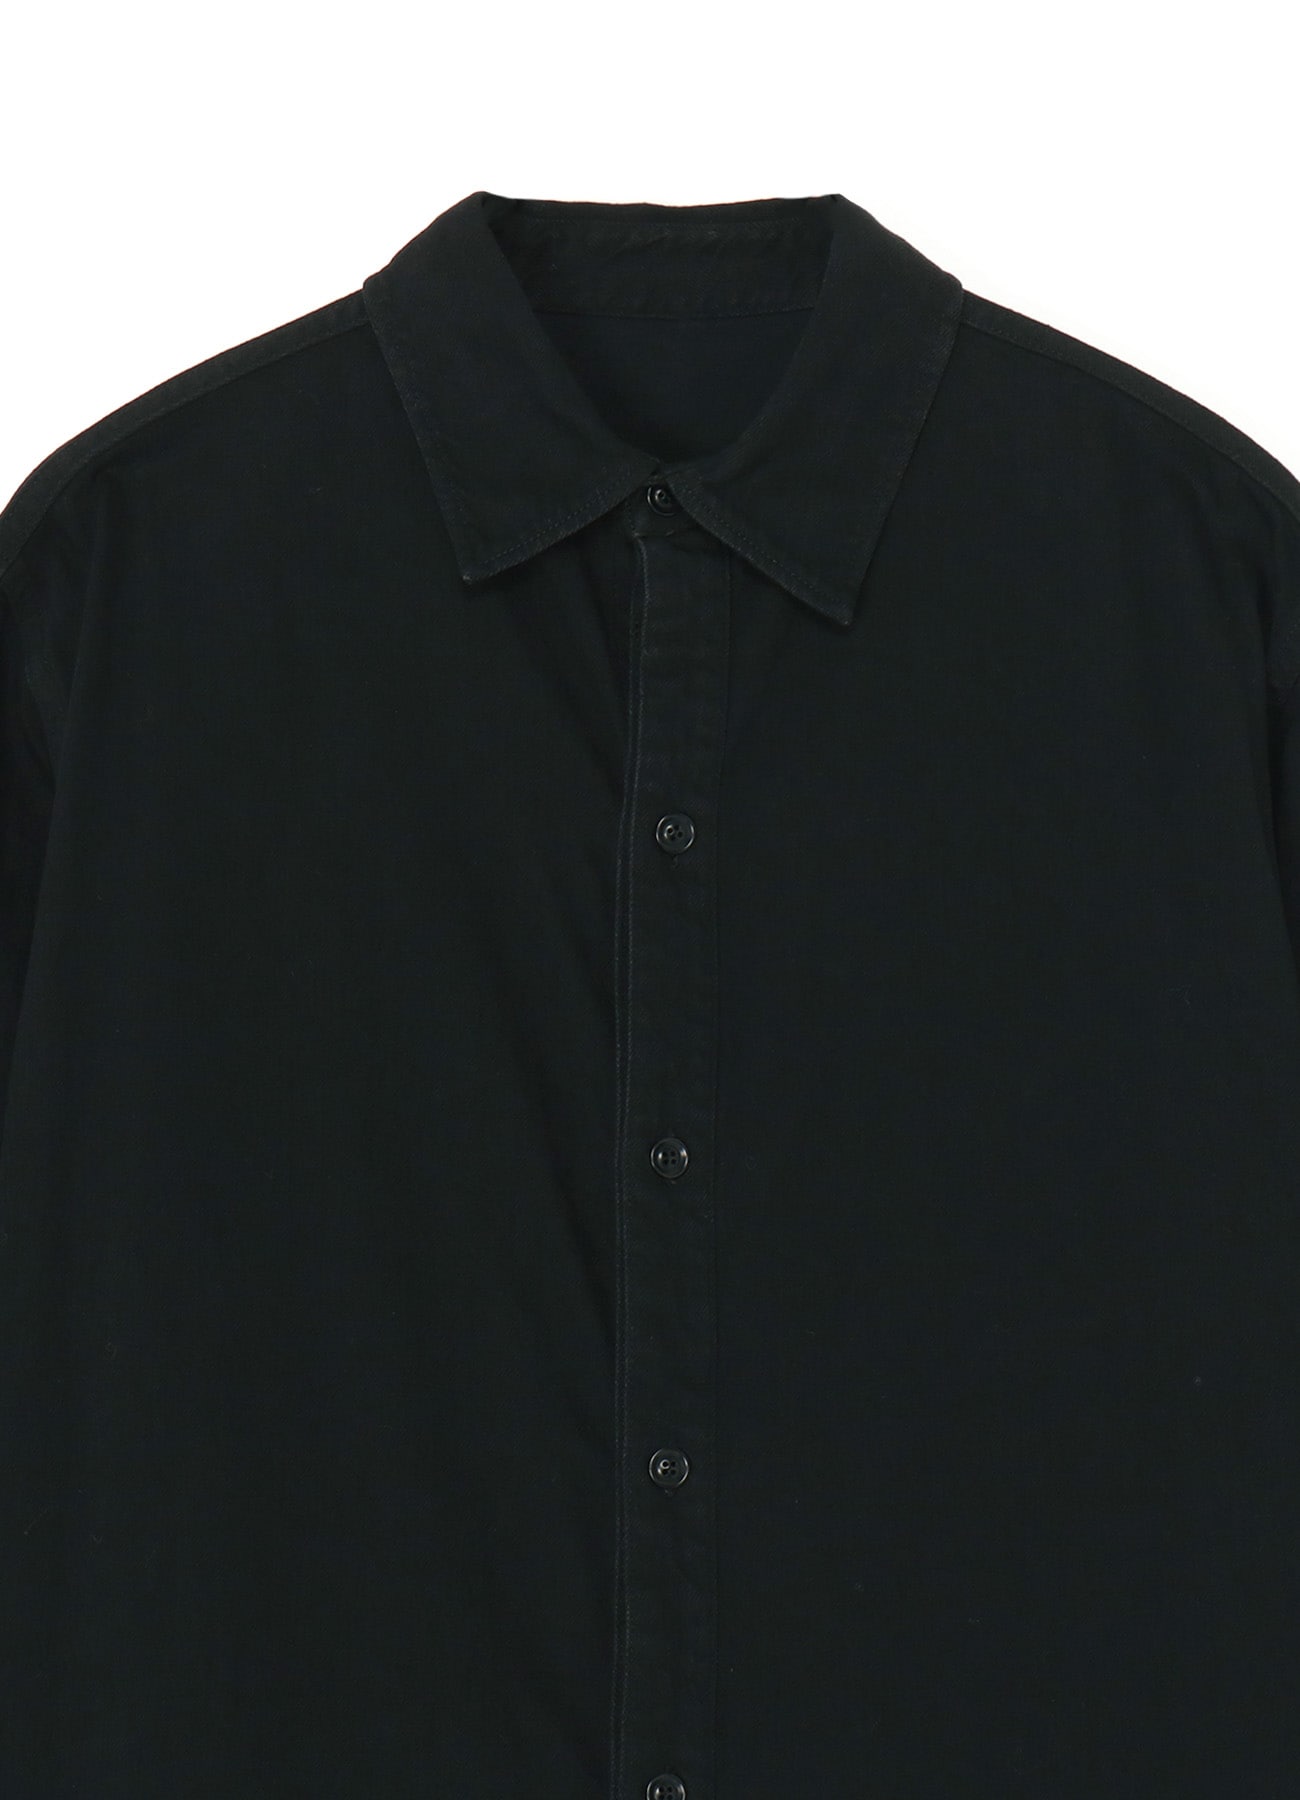 8oz BLACK DENIM DOUBLE PLACKET DRESS